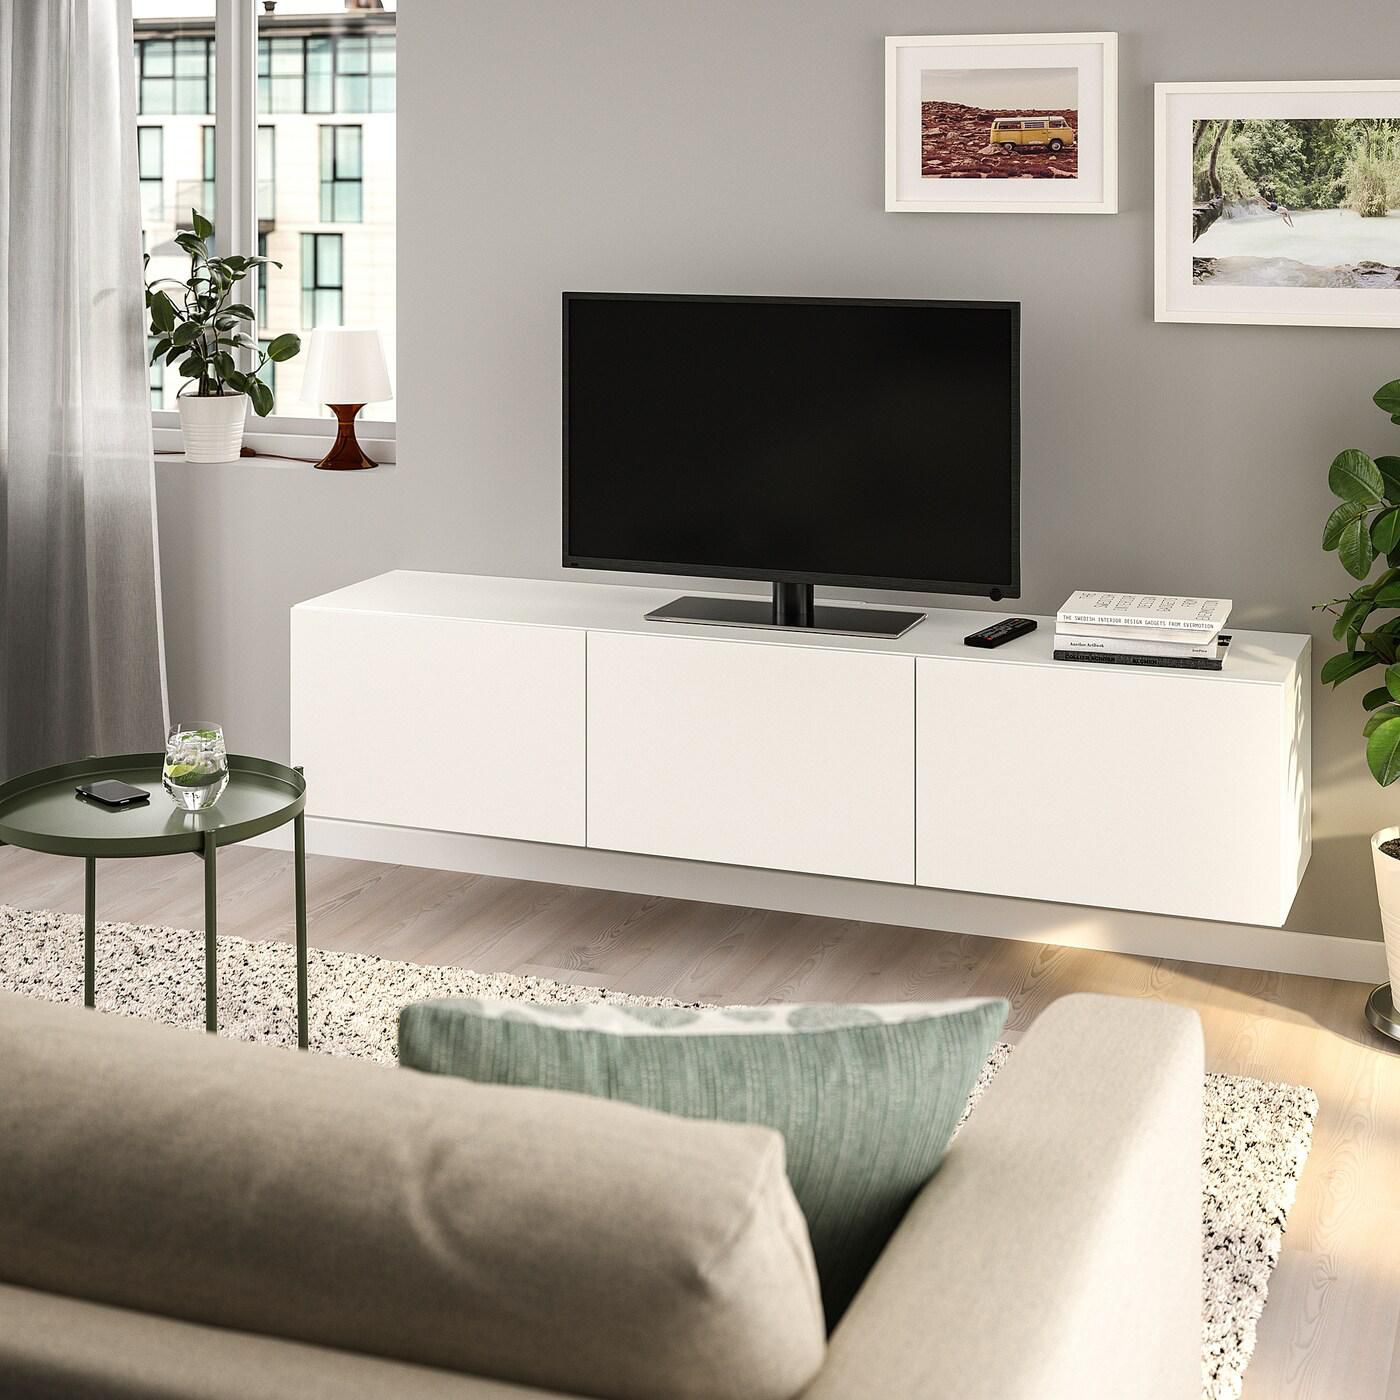 BESTÅ TV bench with doors, white, Lappviken white, 180x42x38 cm price from ikea in Egypt Yaoota!